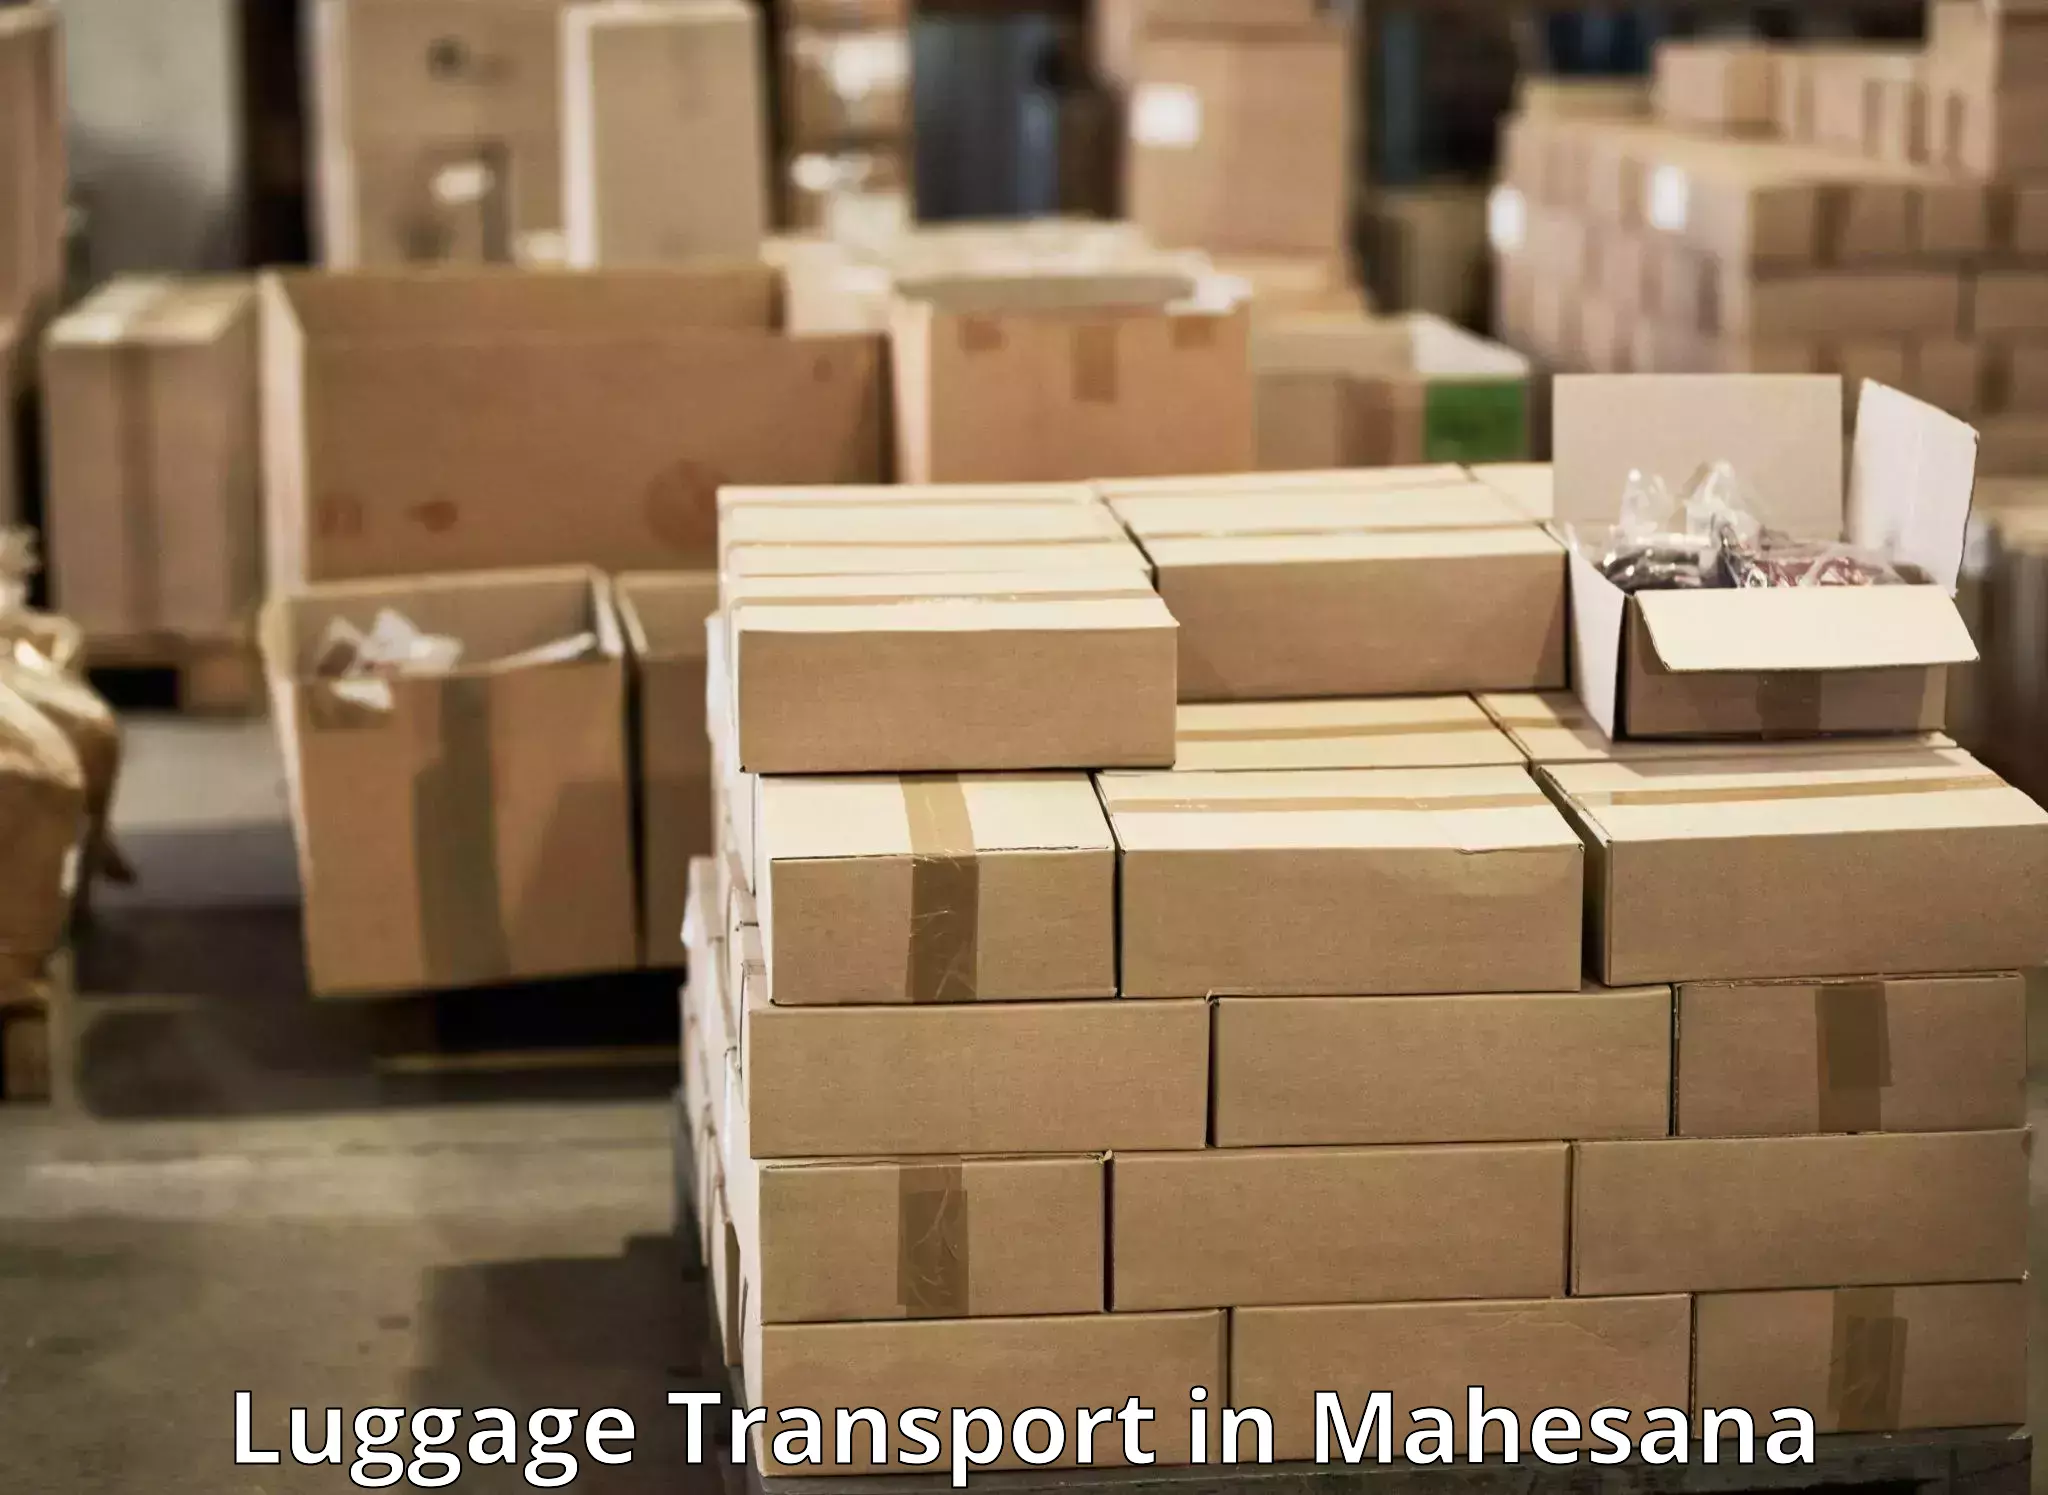 Multi-destination luggage transport in Mahesana